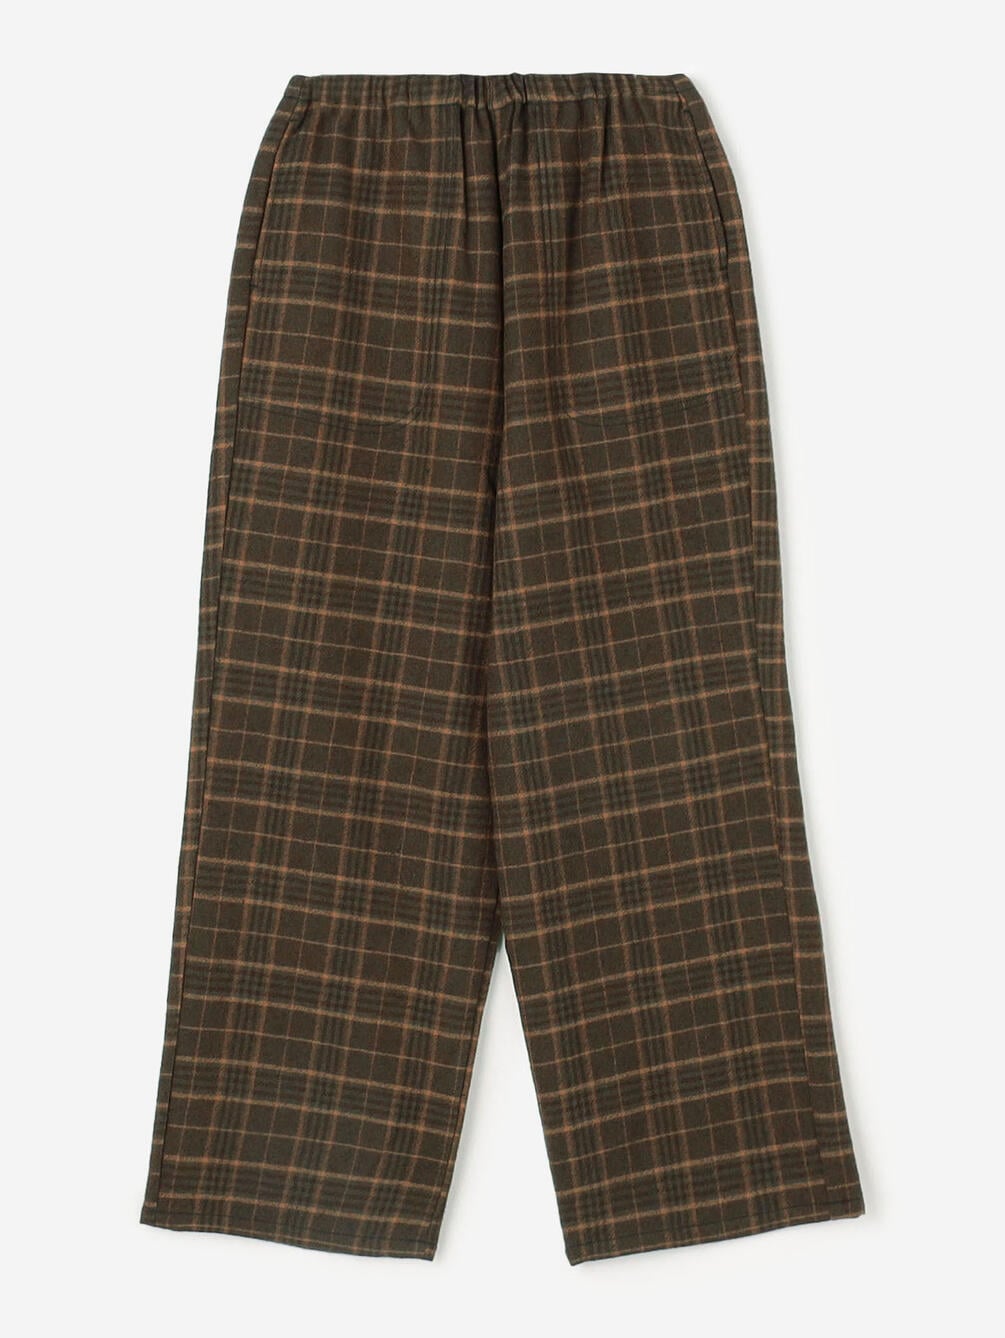 [50% off] Danton Woman's Wool Straight Easy Pants - Orange x Green Checks